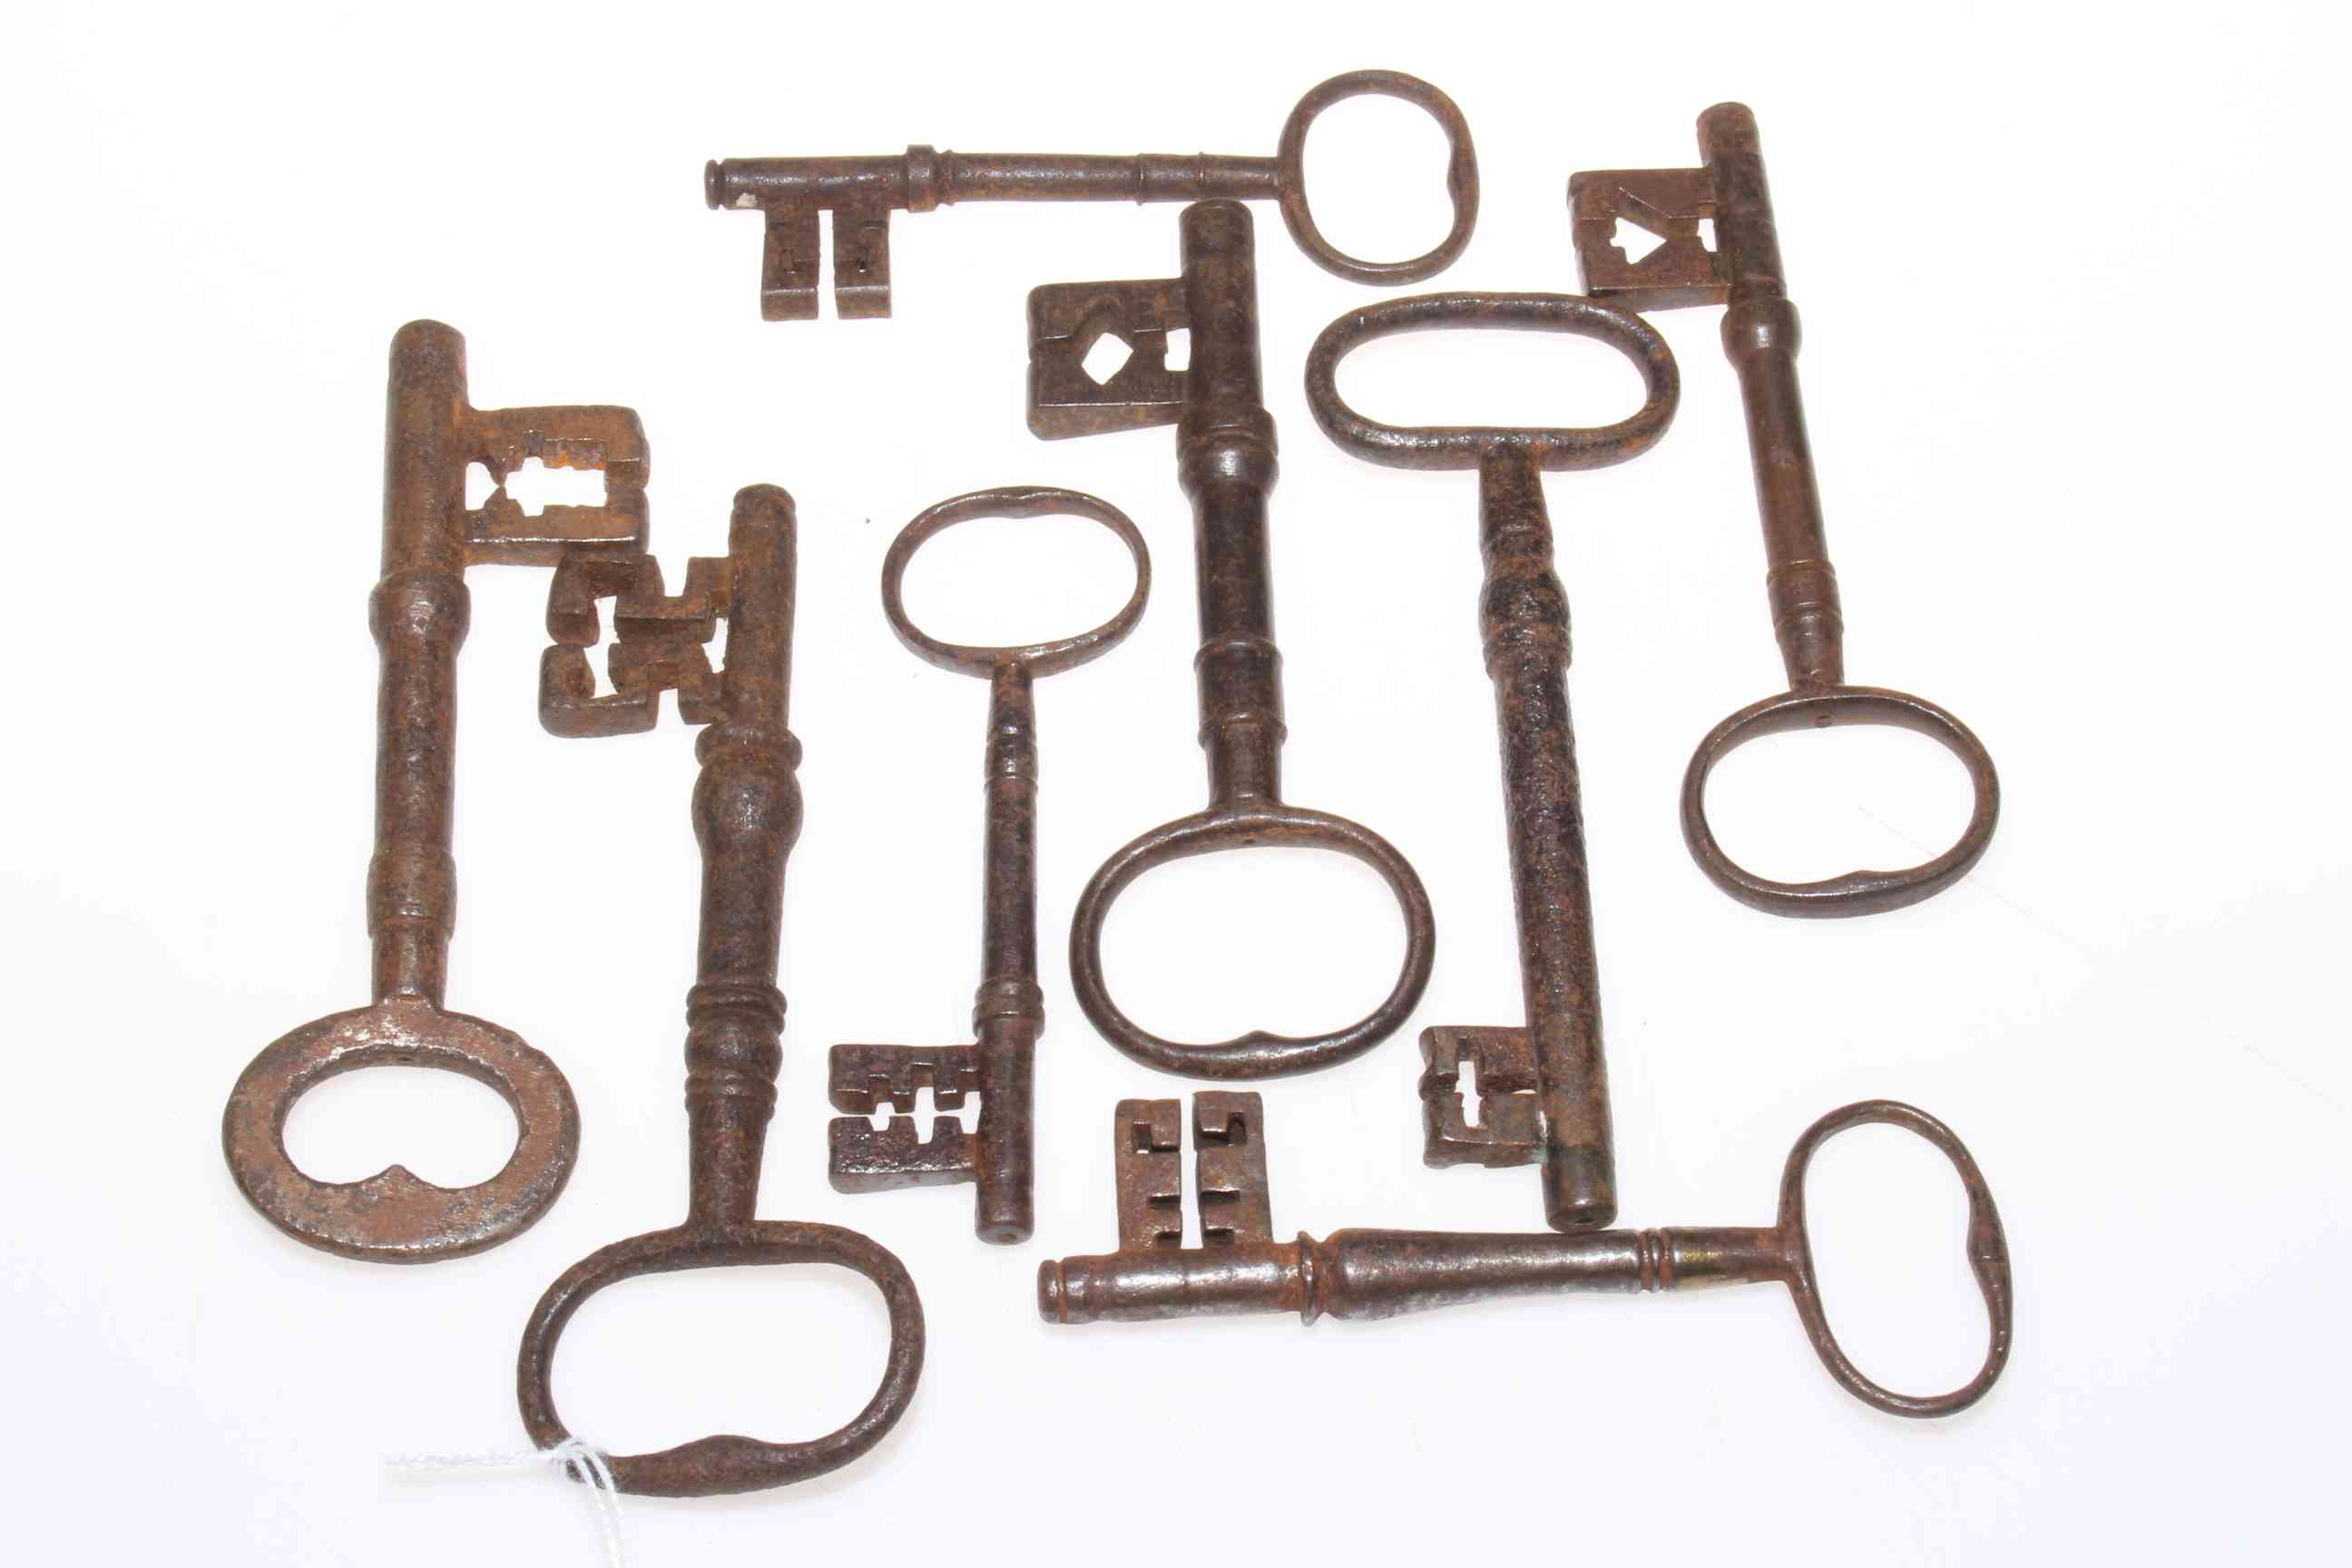 Eight 18th/19th Century antique keys.